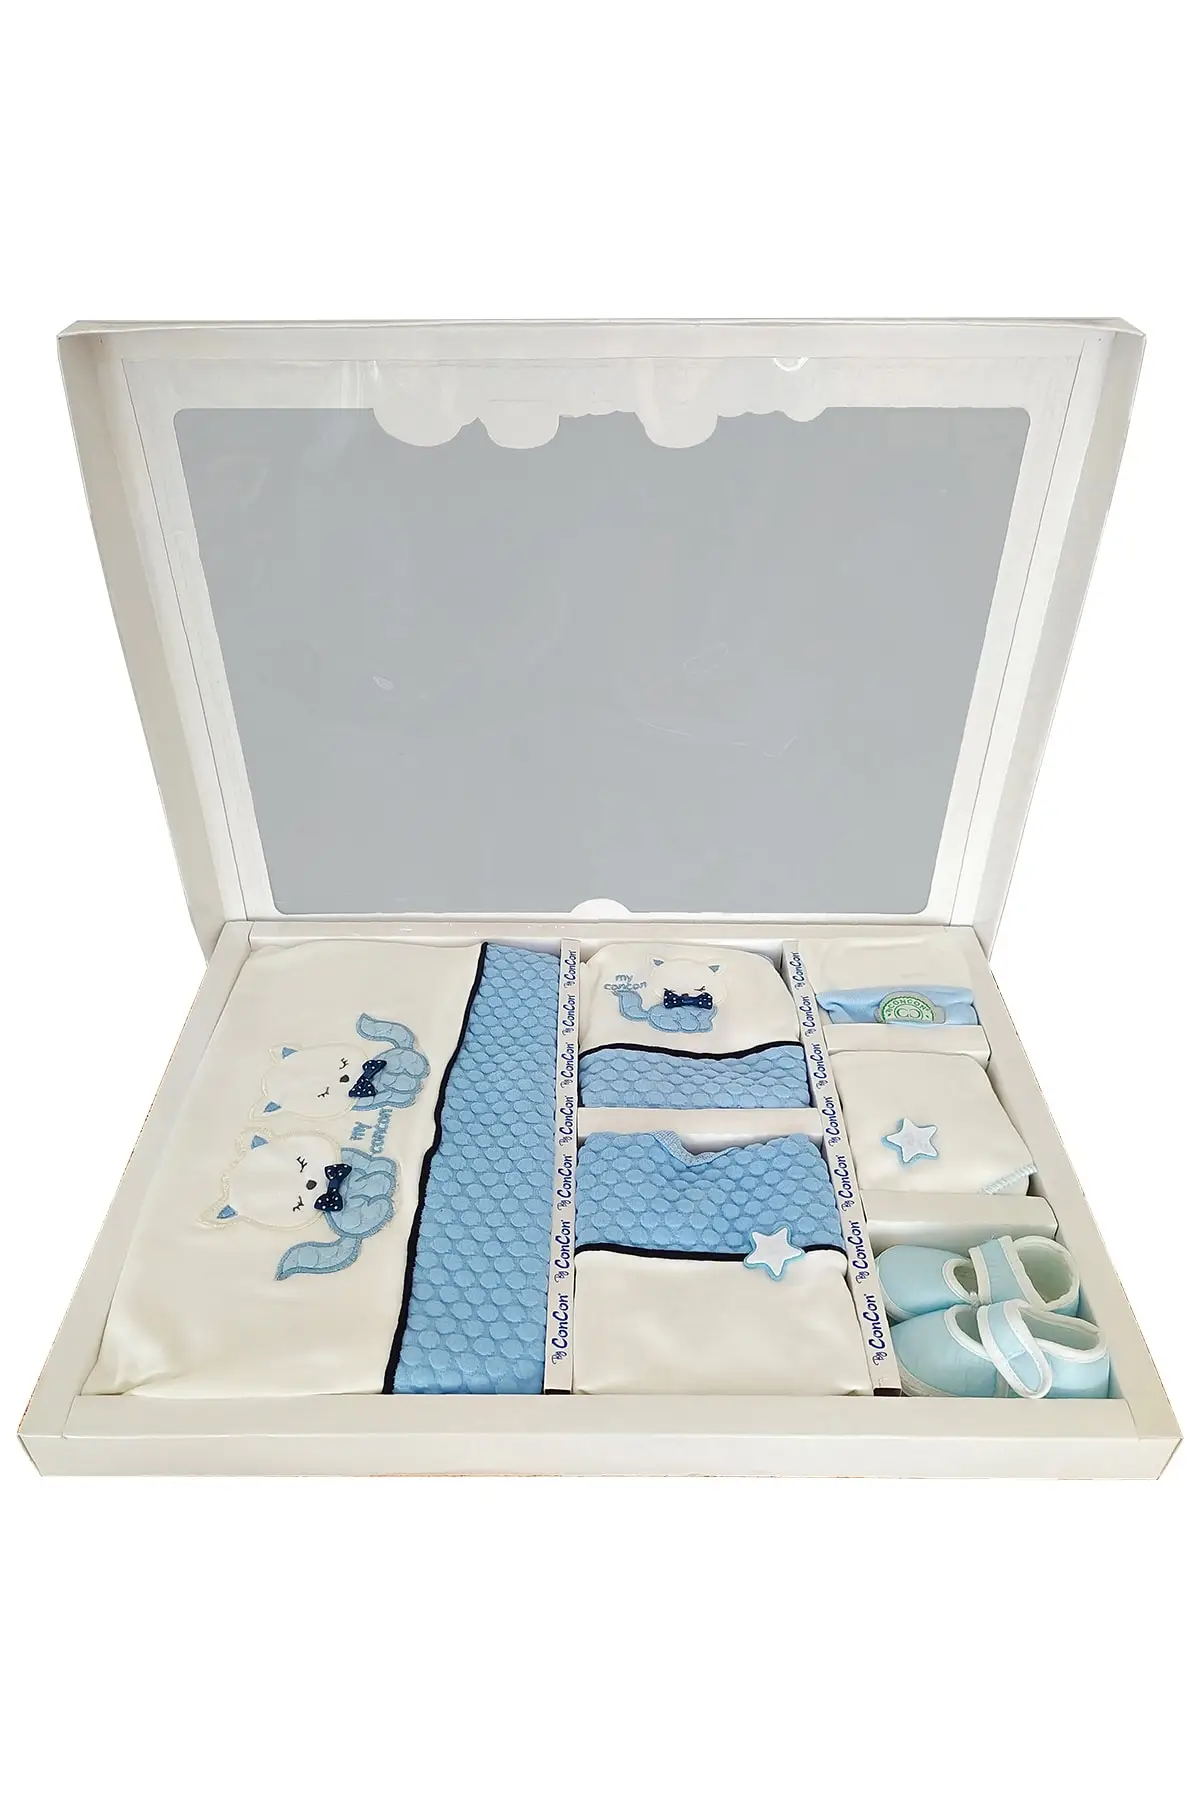 Male Baby Hospital Output 10 Piece Newborn Outfit Blue Natural Cotton Clothing Set 10'lu White Çıkışları